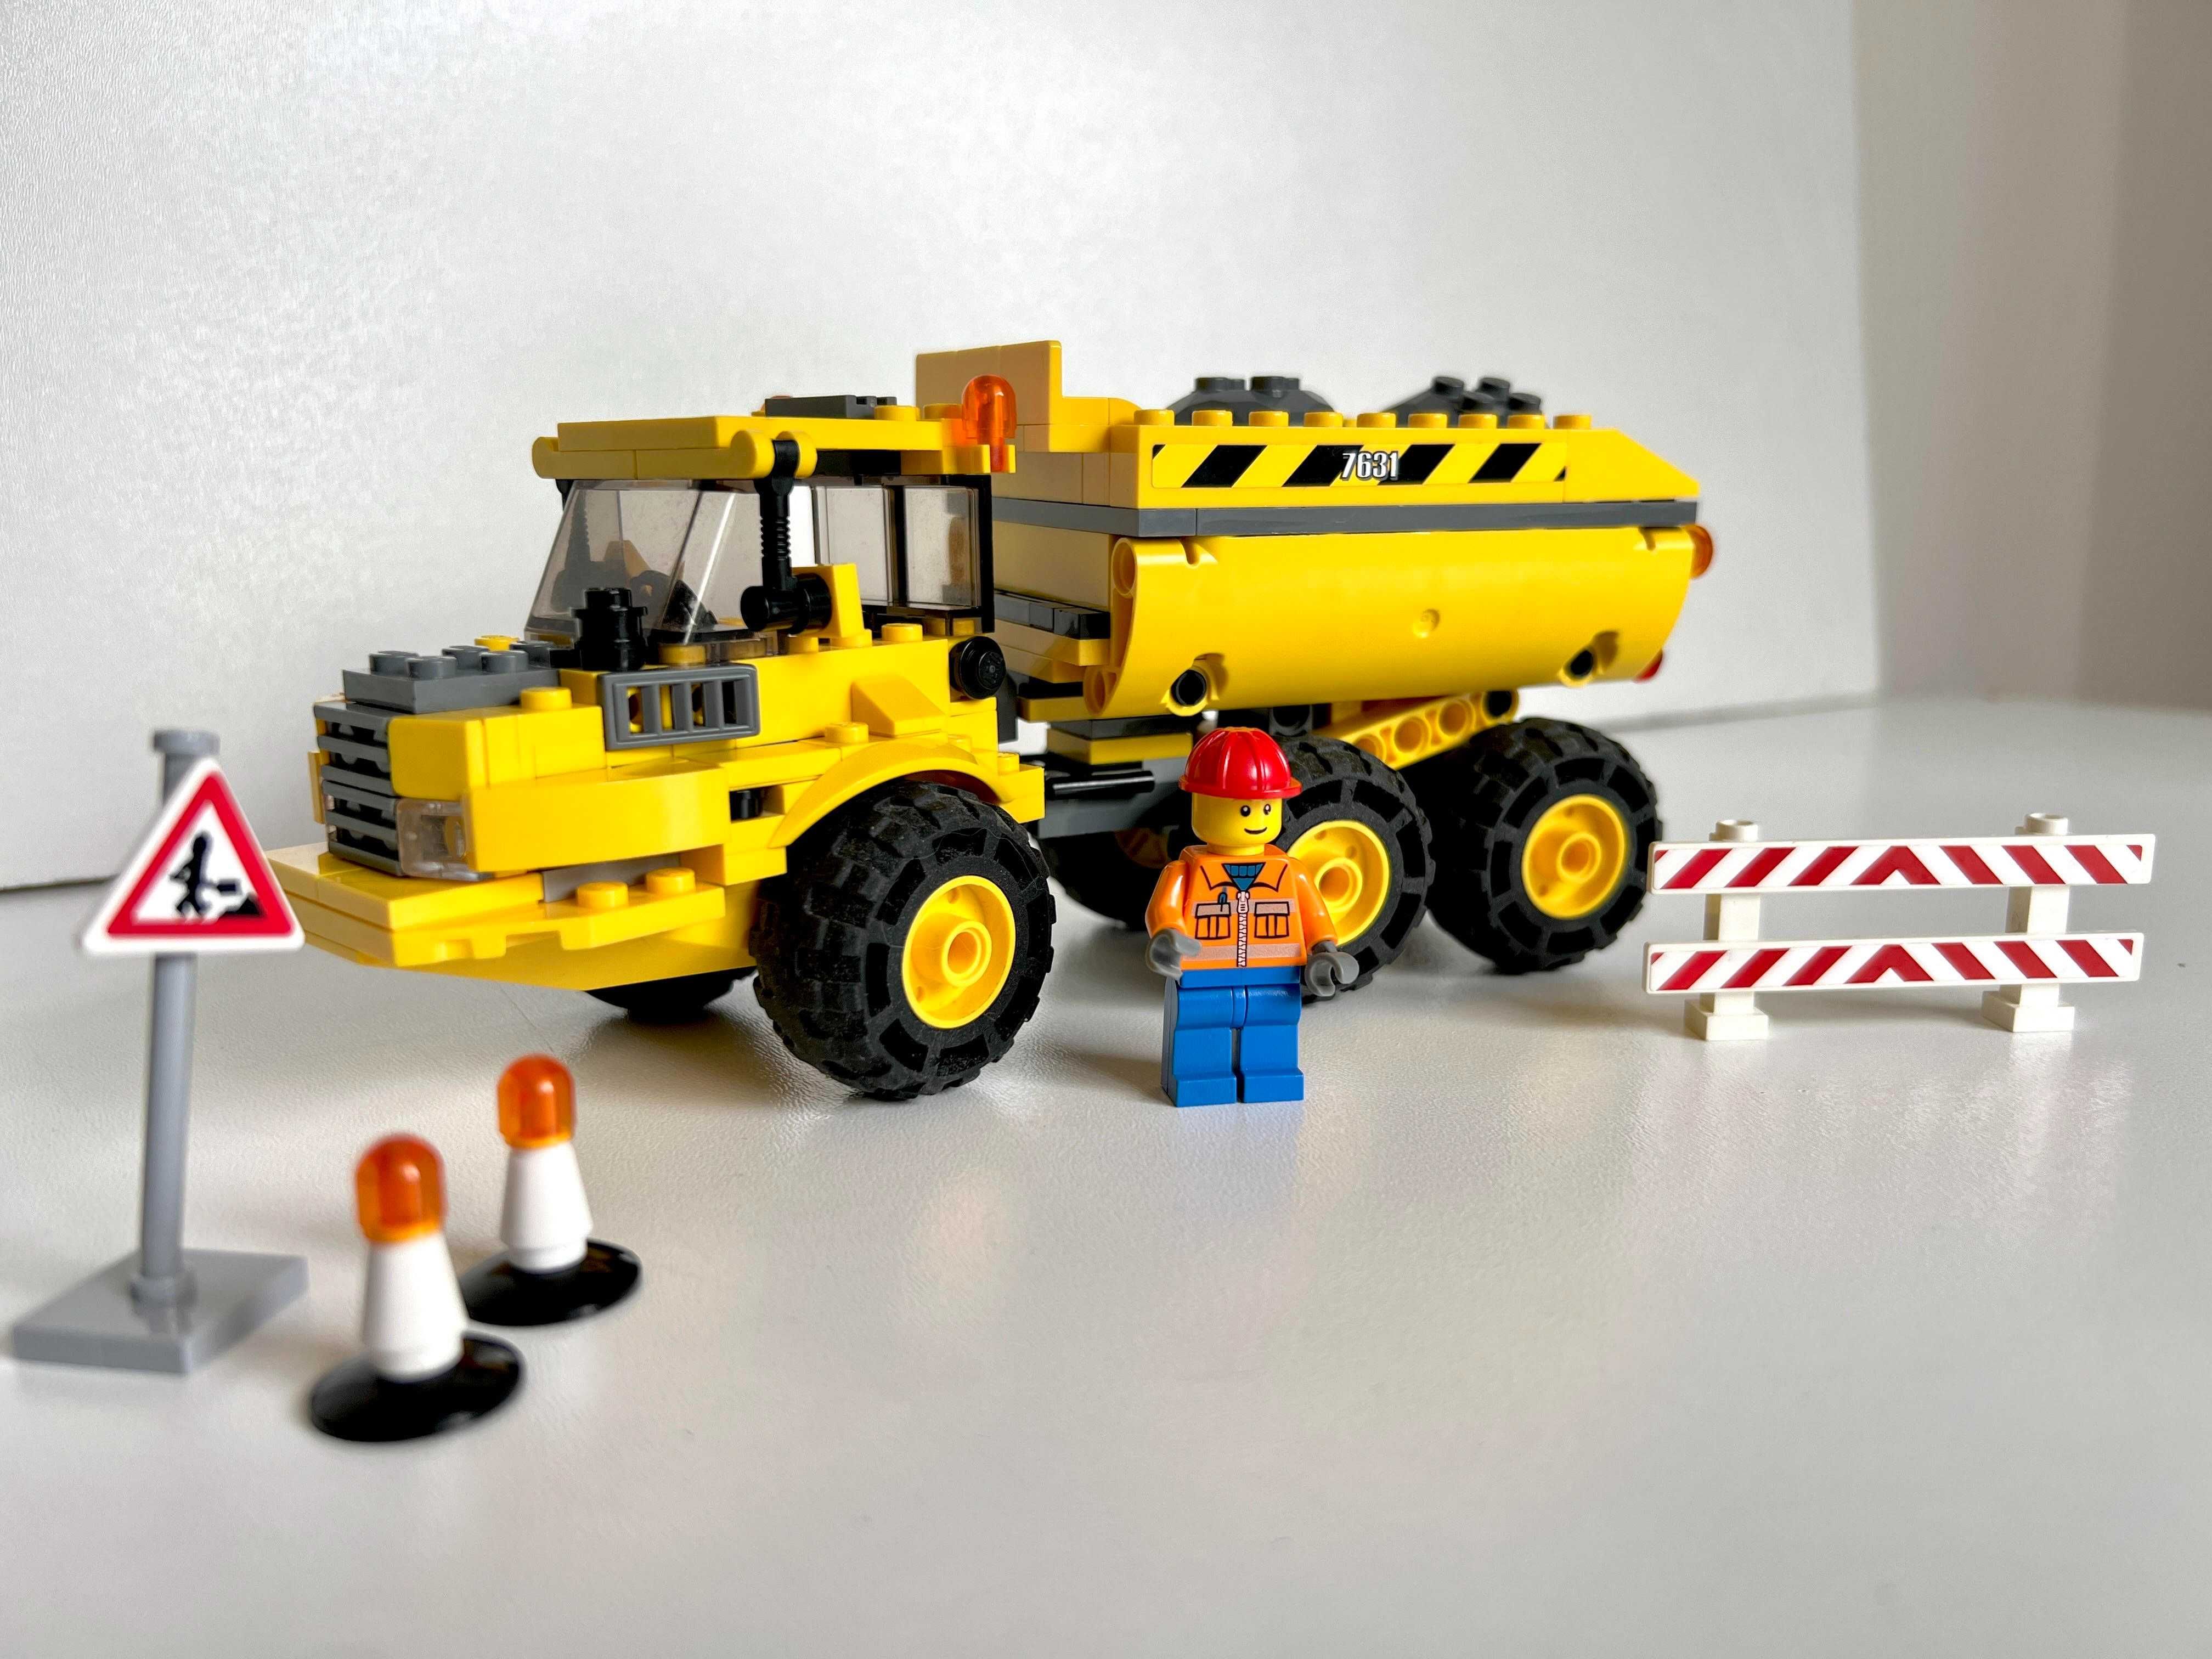 Lego City 7631  Wywrotka  Dump Truck